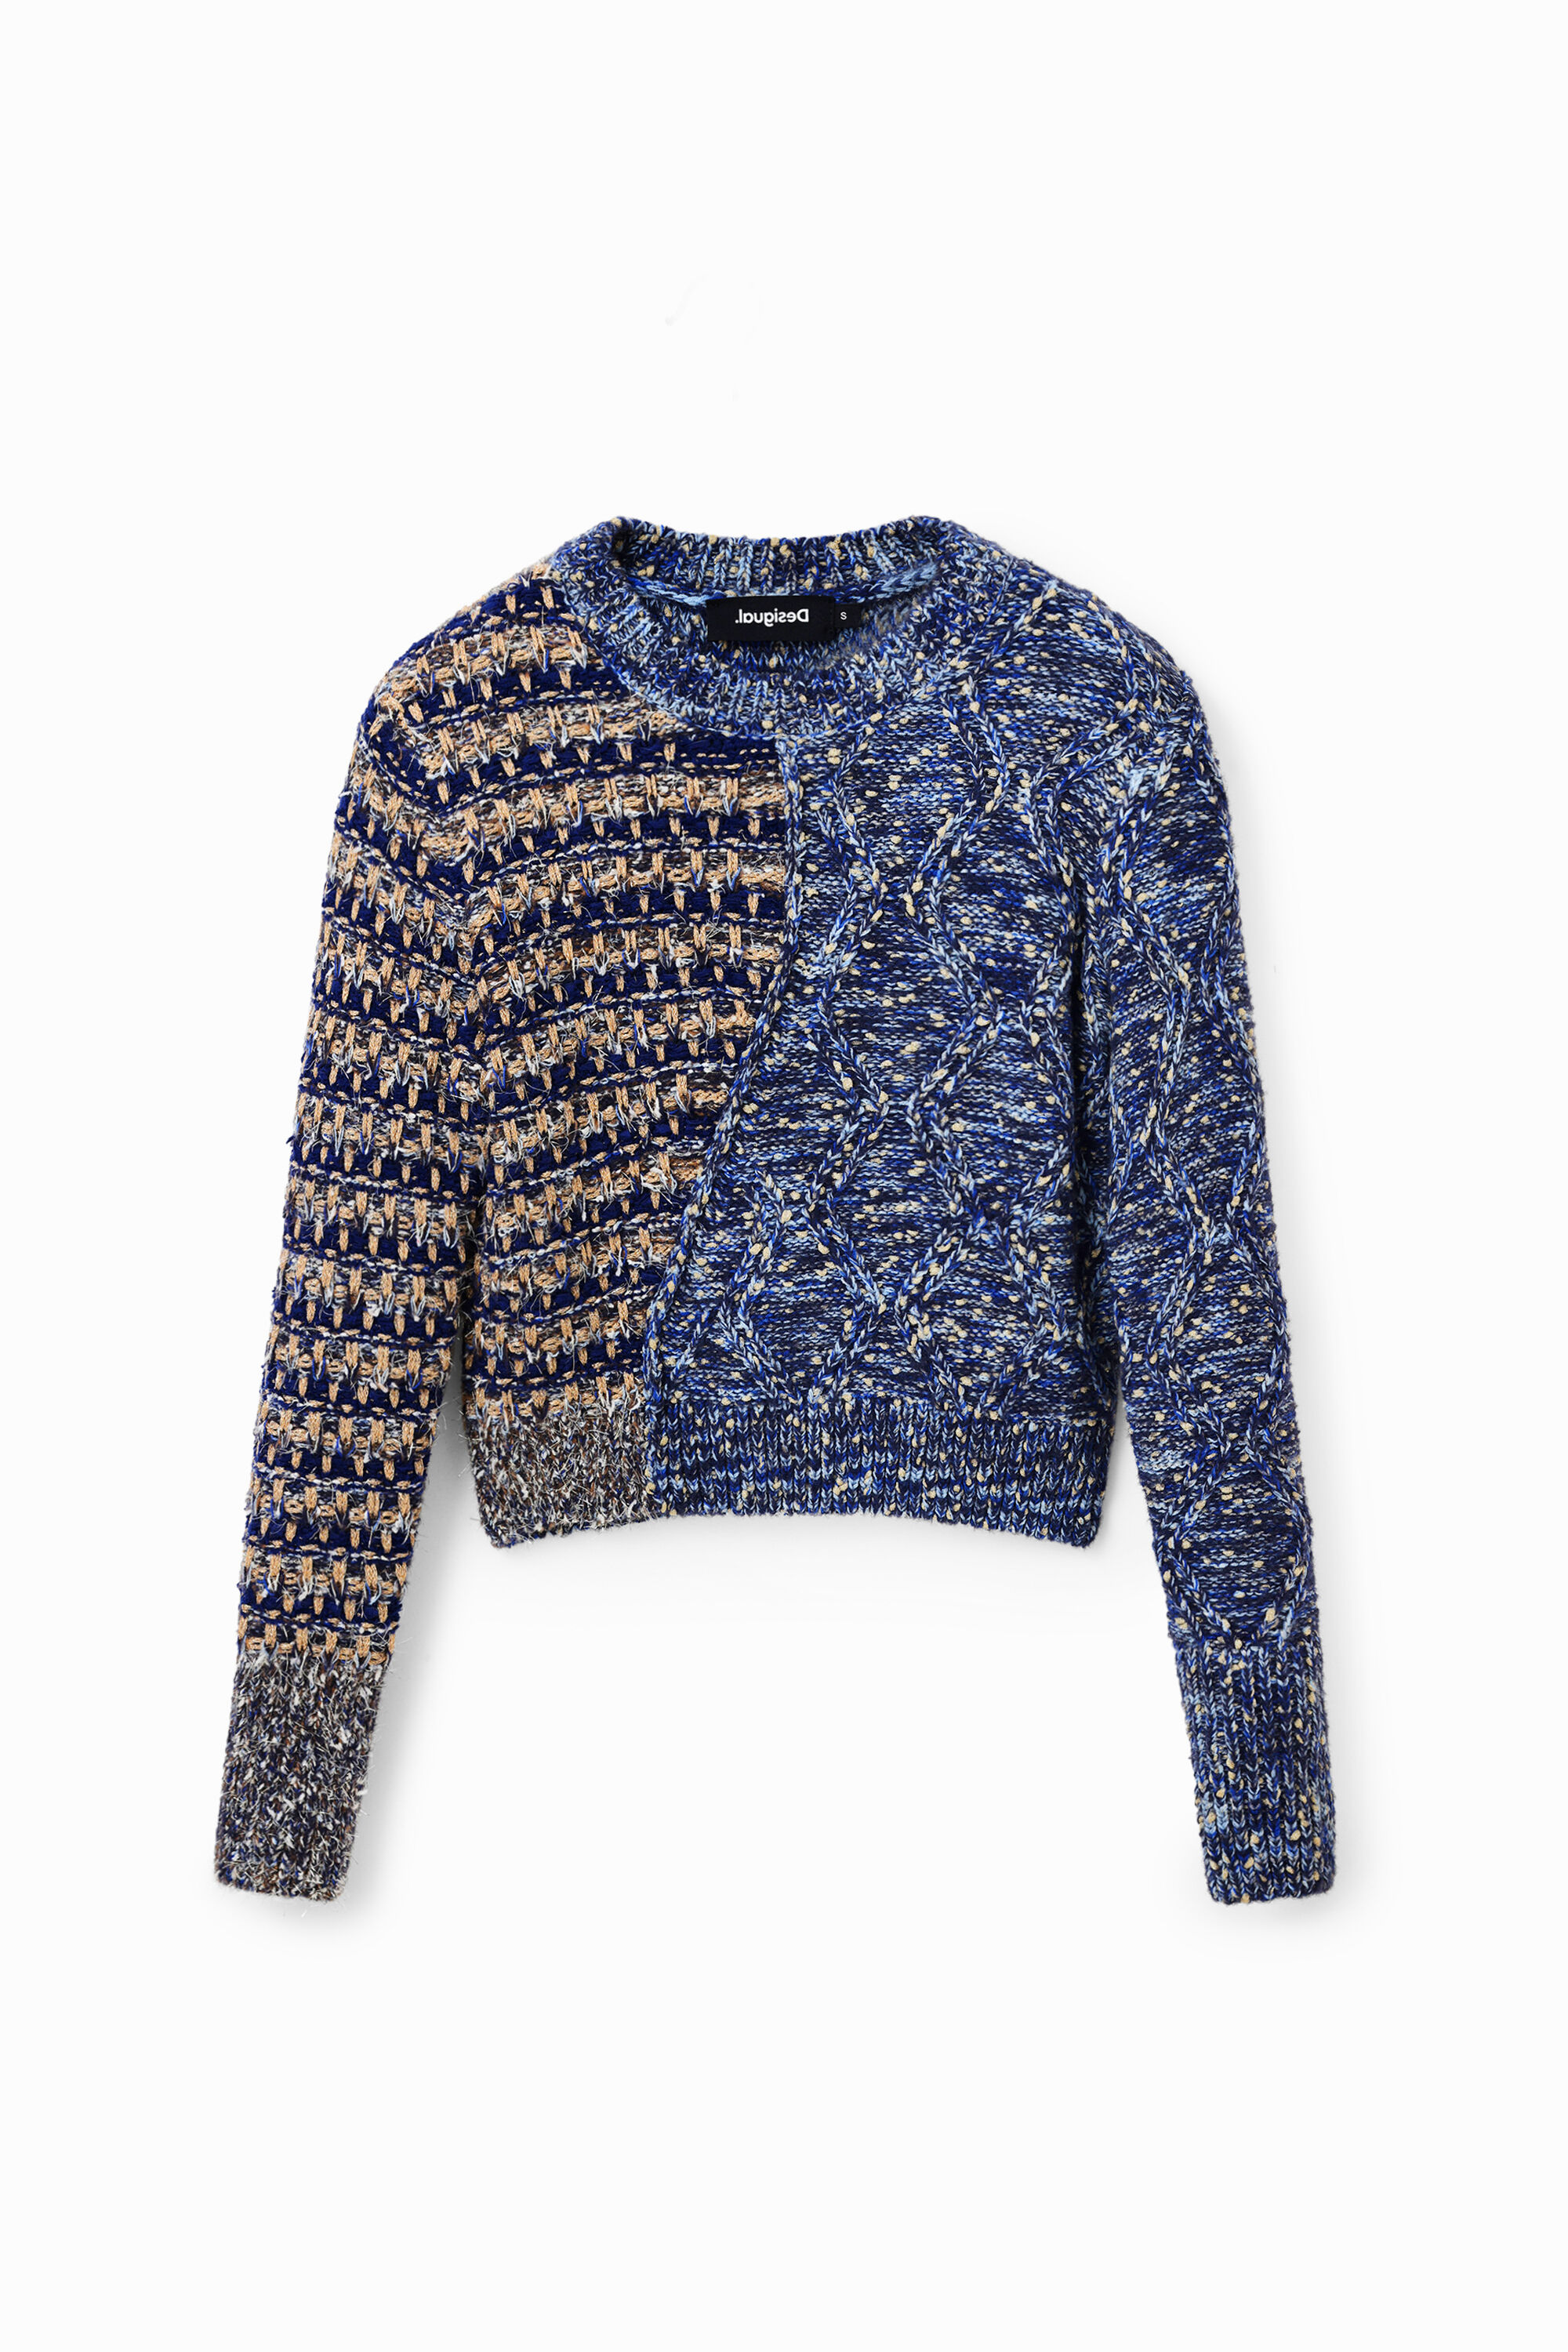 Hybrid chunky knit pullover - BLUE - XS